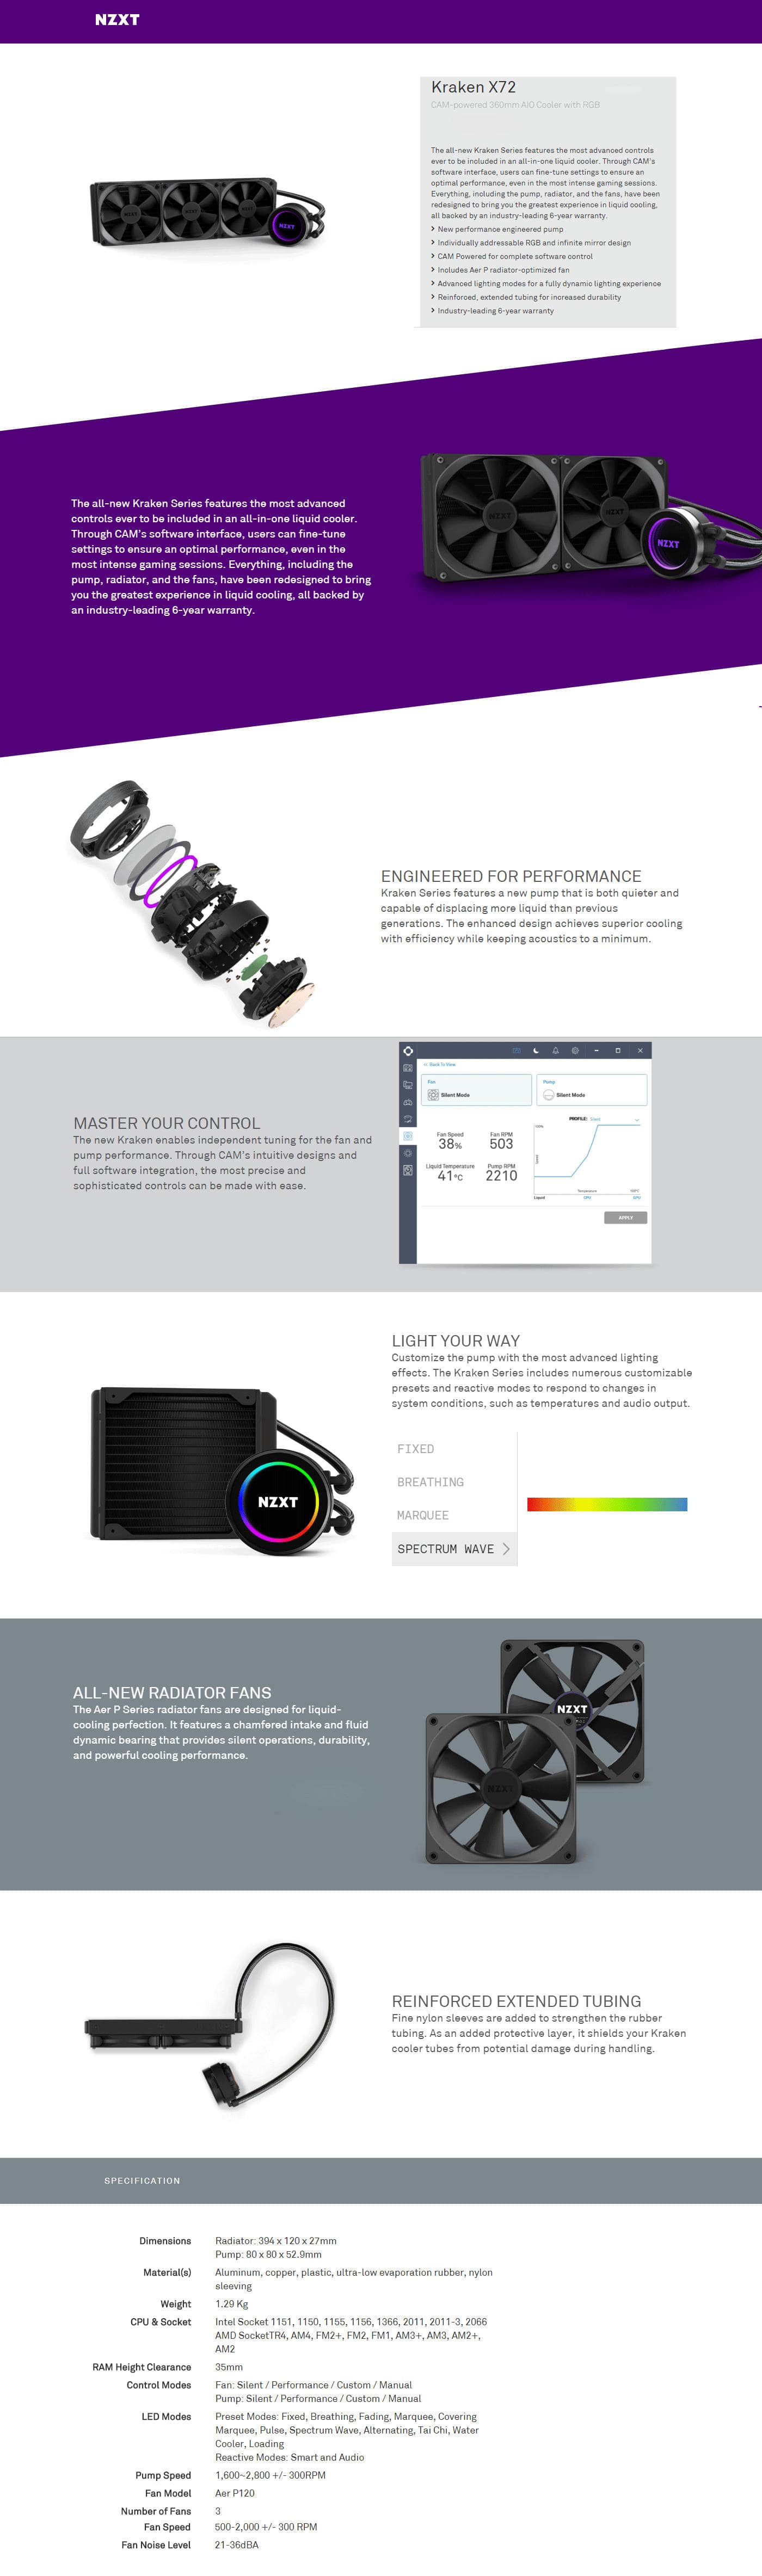  Buy Online Nzxt Kraken X72 CAM-Powered 360mm AIO Cooler with RGB